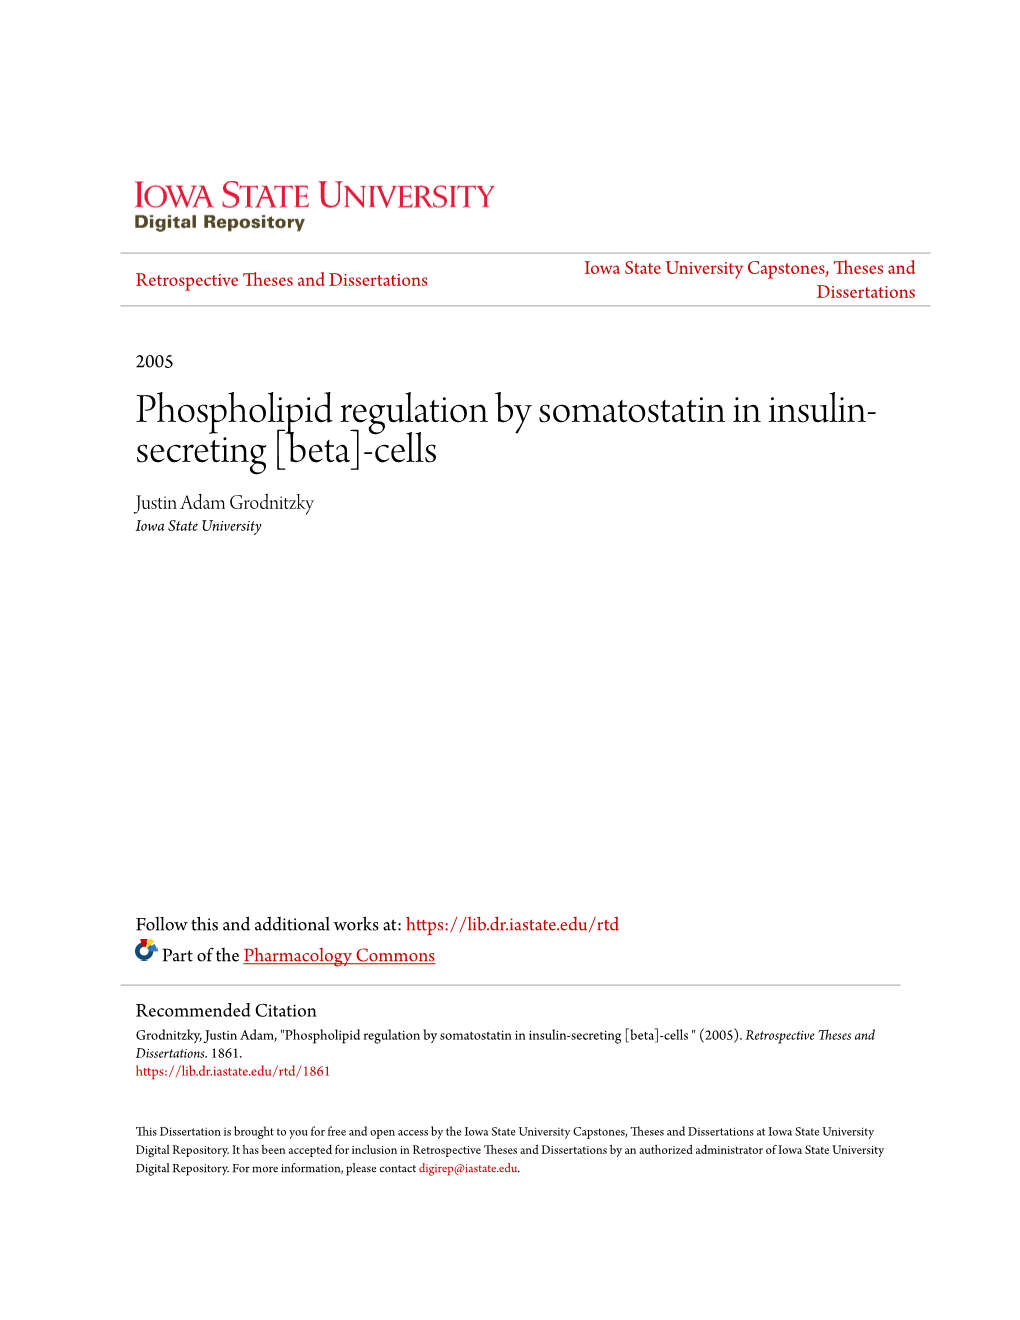 Phospholipid Regulation by Somatostatin in Insulin-Secreting [Beta]-Cells " (2005)